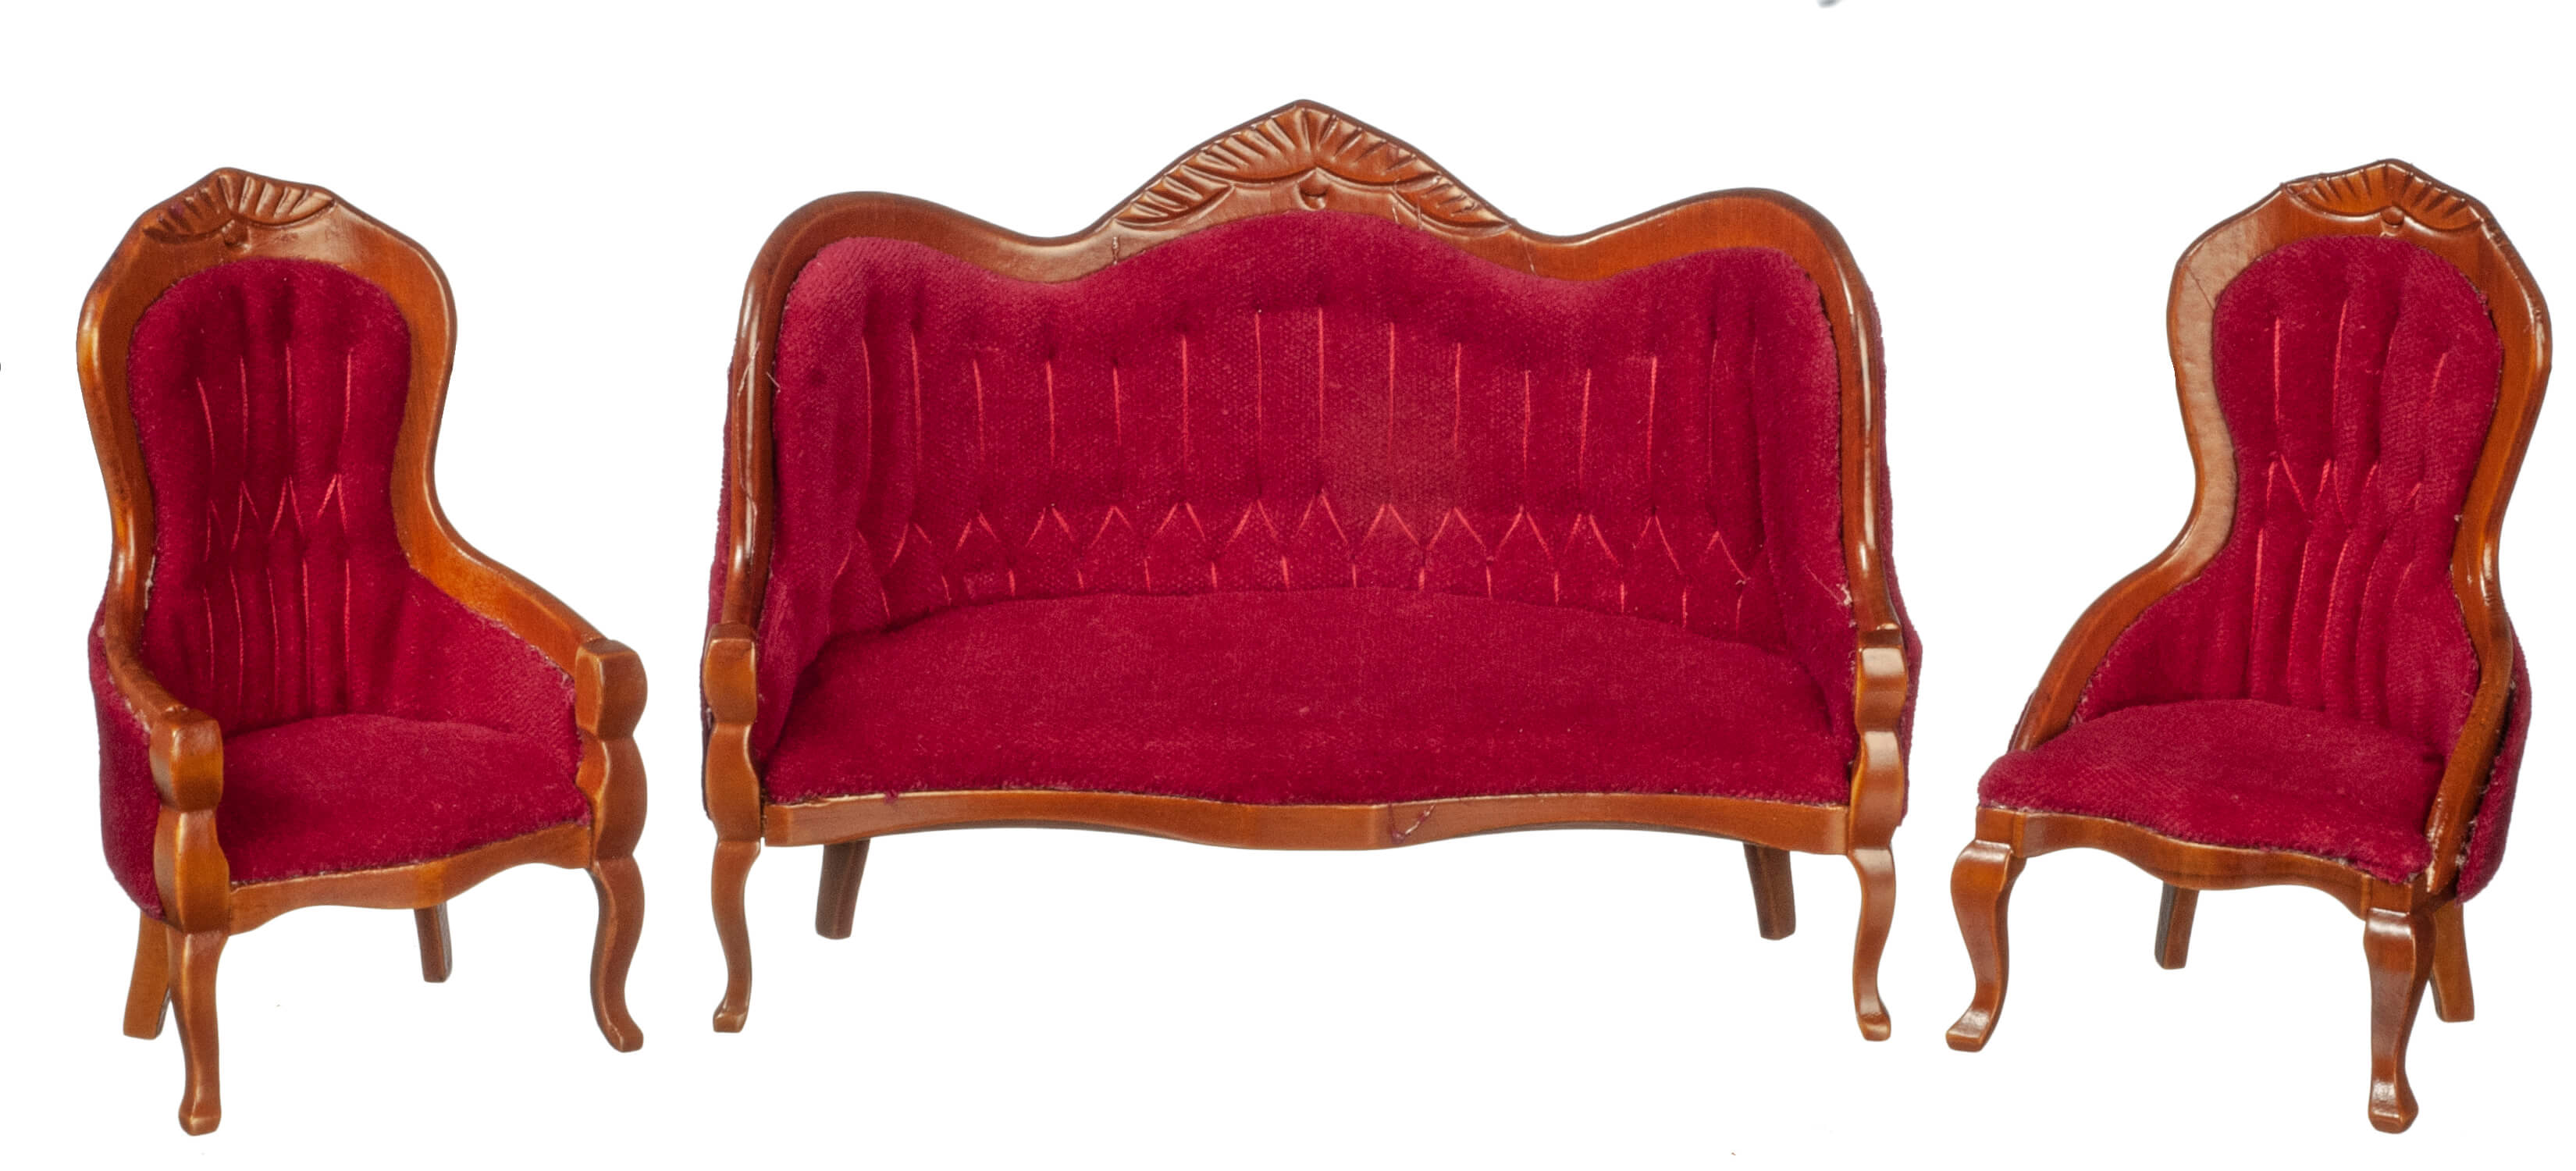 Victorian Living Room Set - Red & Walnut - 3pc